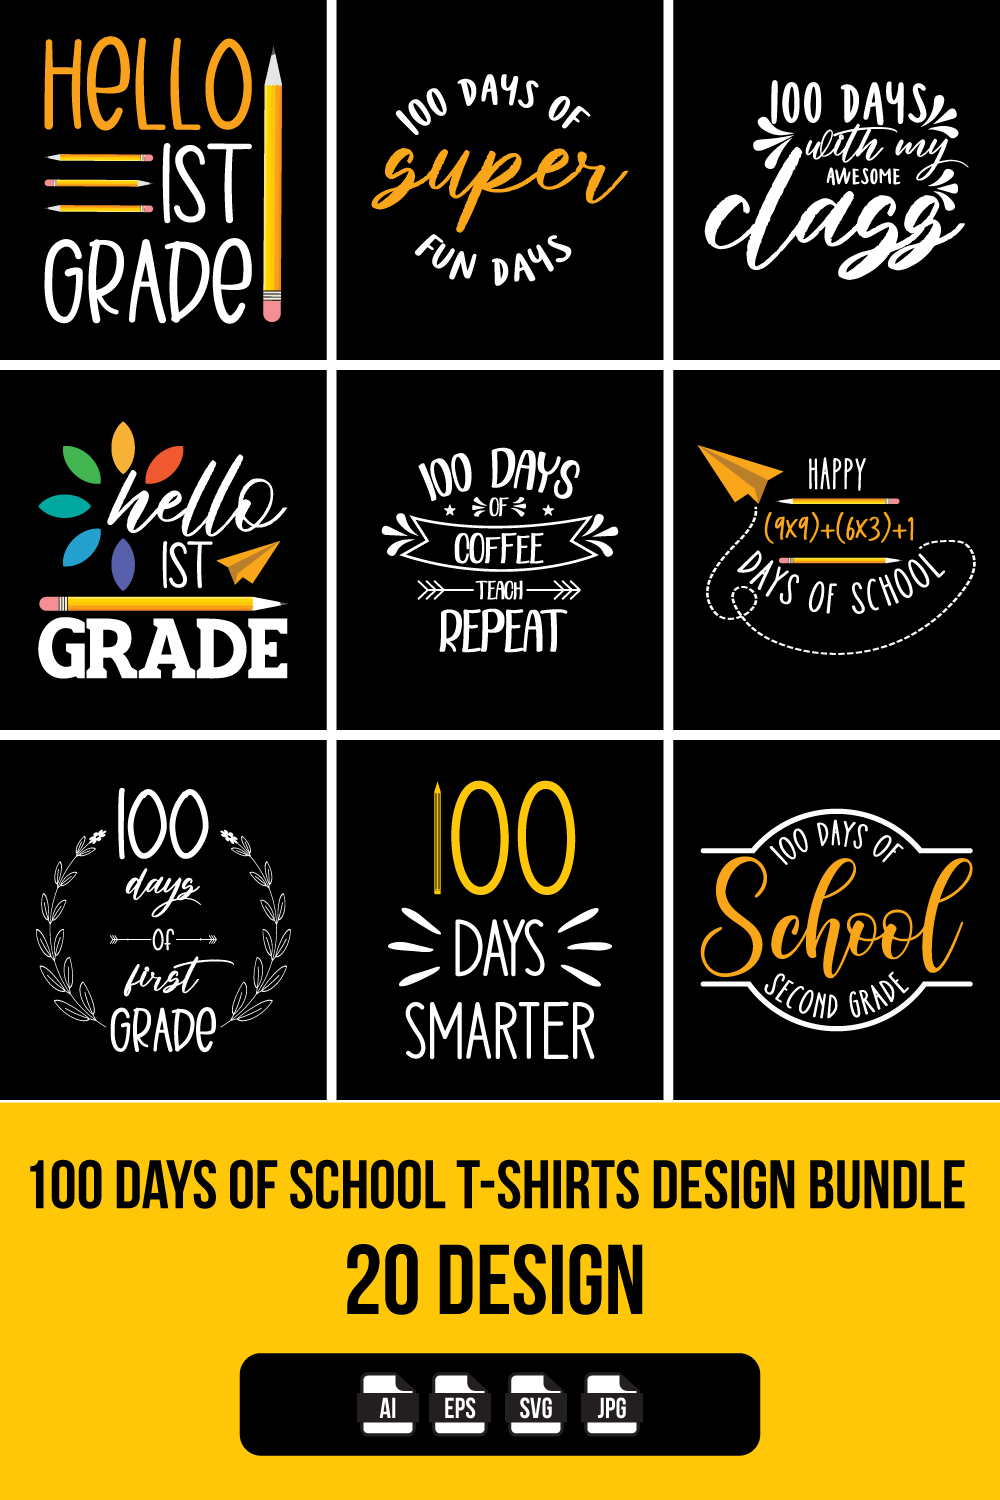 100 Days of School T-Shirts Design Bundle 20 Designs pinterest preview image.